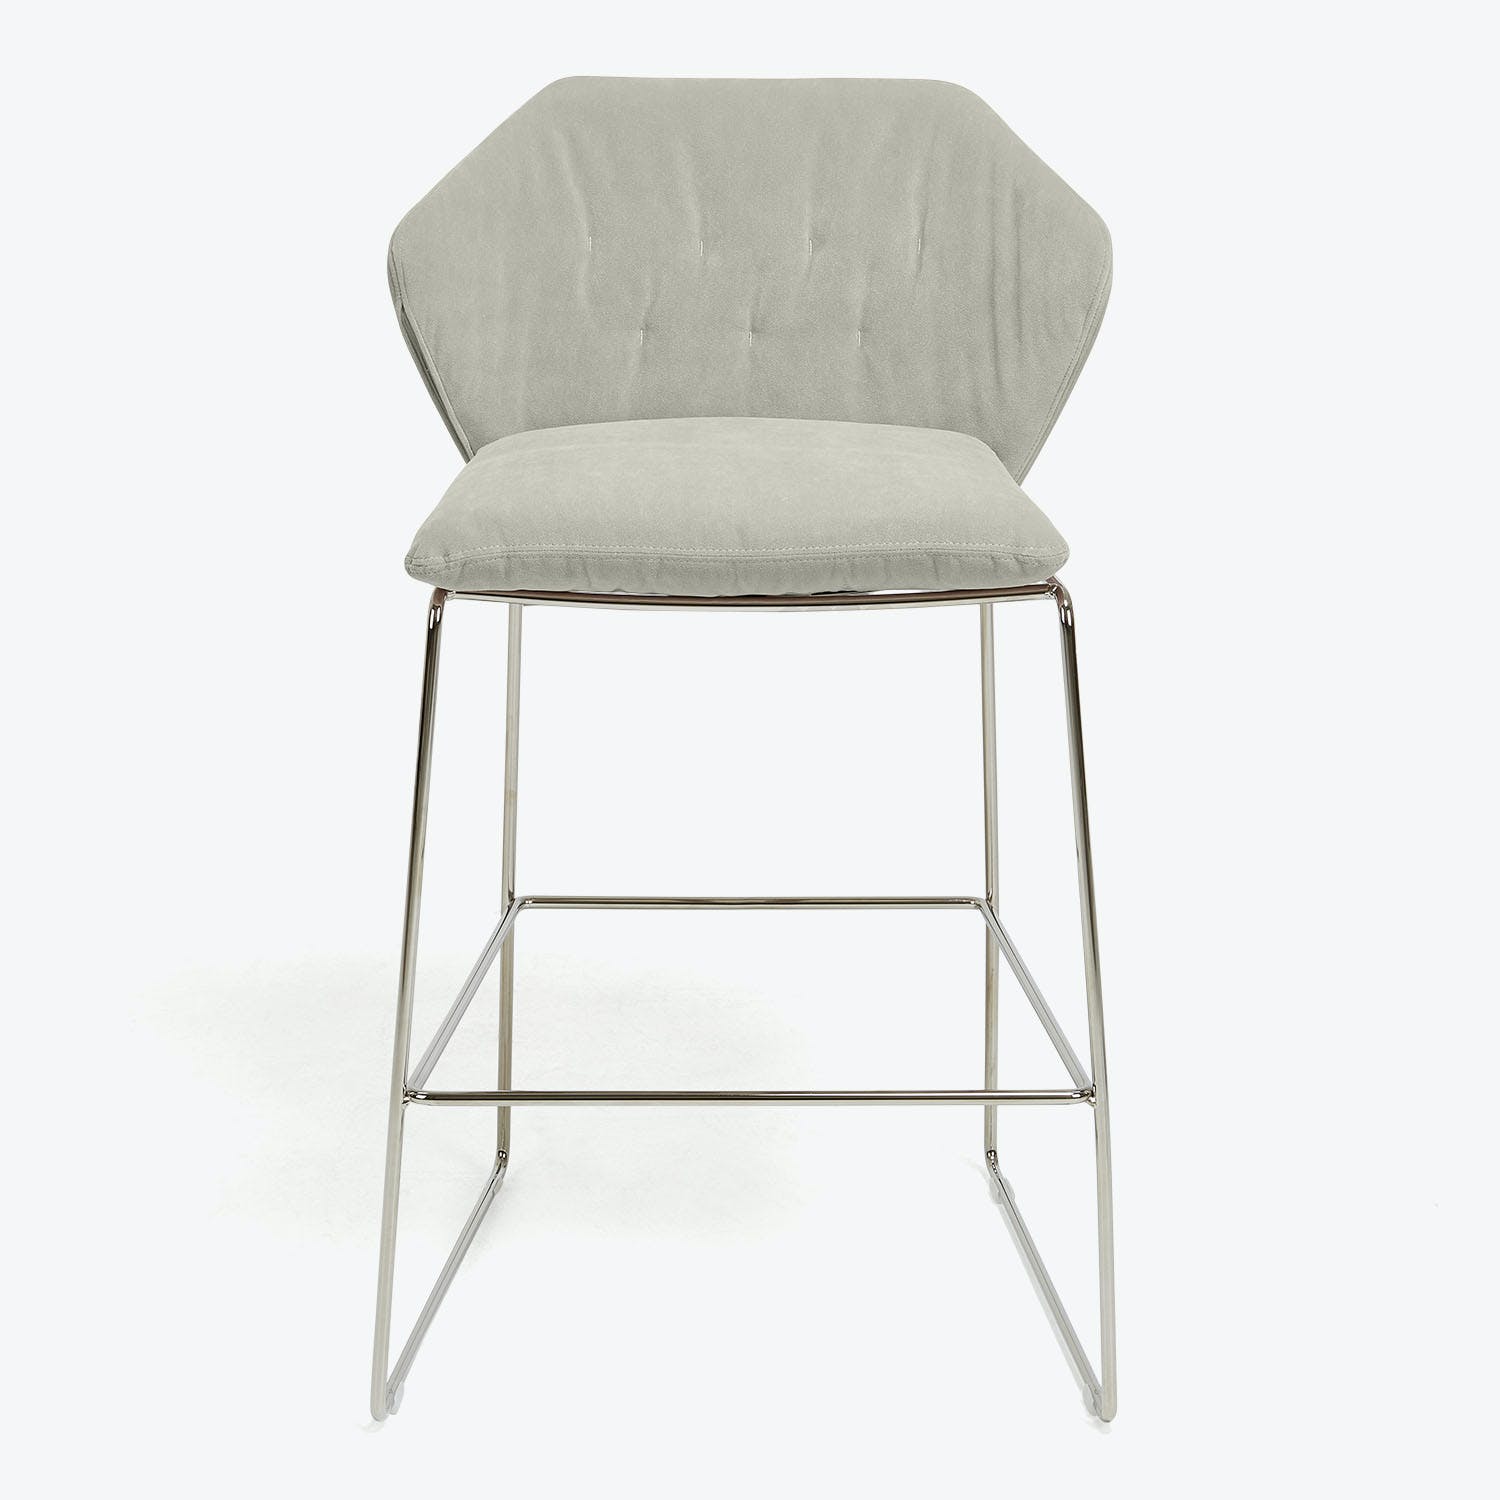 Modern bar stool with light grey upholstery and elegant design.